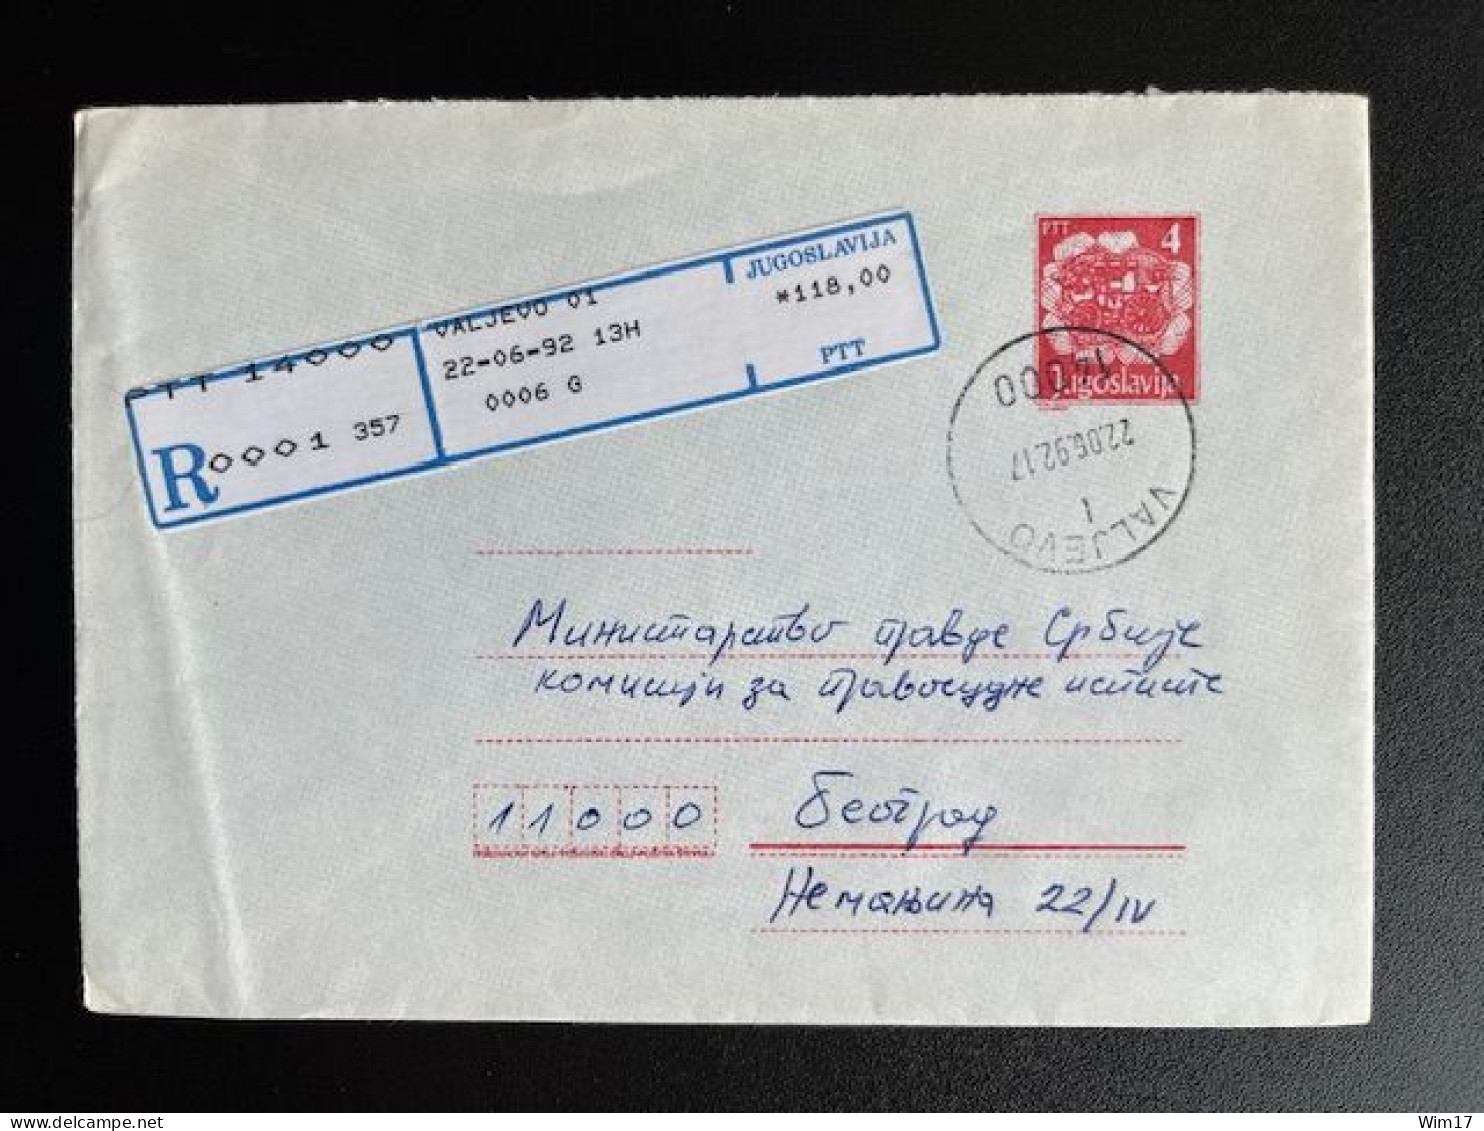 JUGOSLAVIJA YUGOSLAVIA 1992 REGISTERED LETTER VALJEVO TO BELGRADE BEOGRAD 22-06-1992 - Covers & Documents